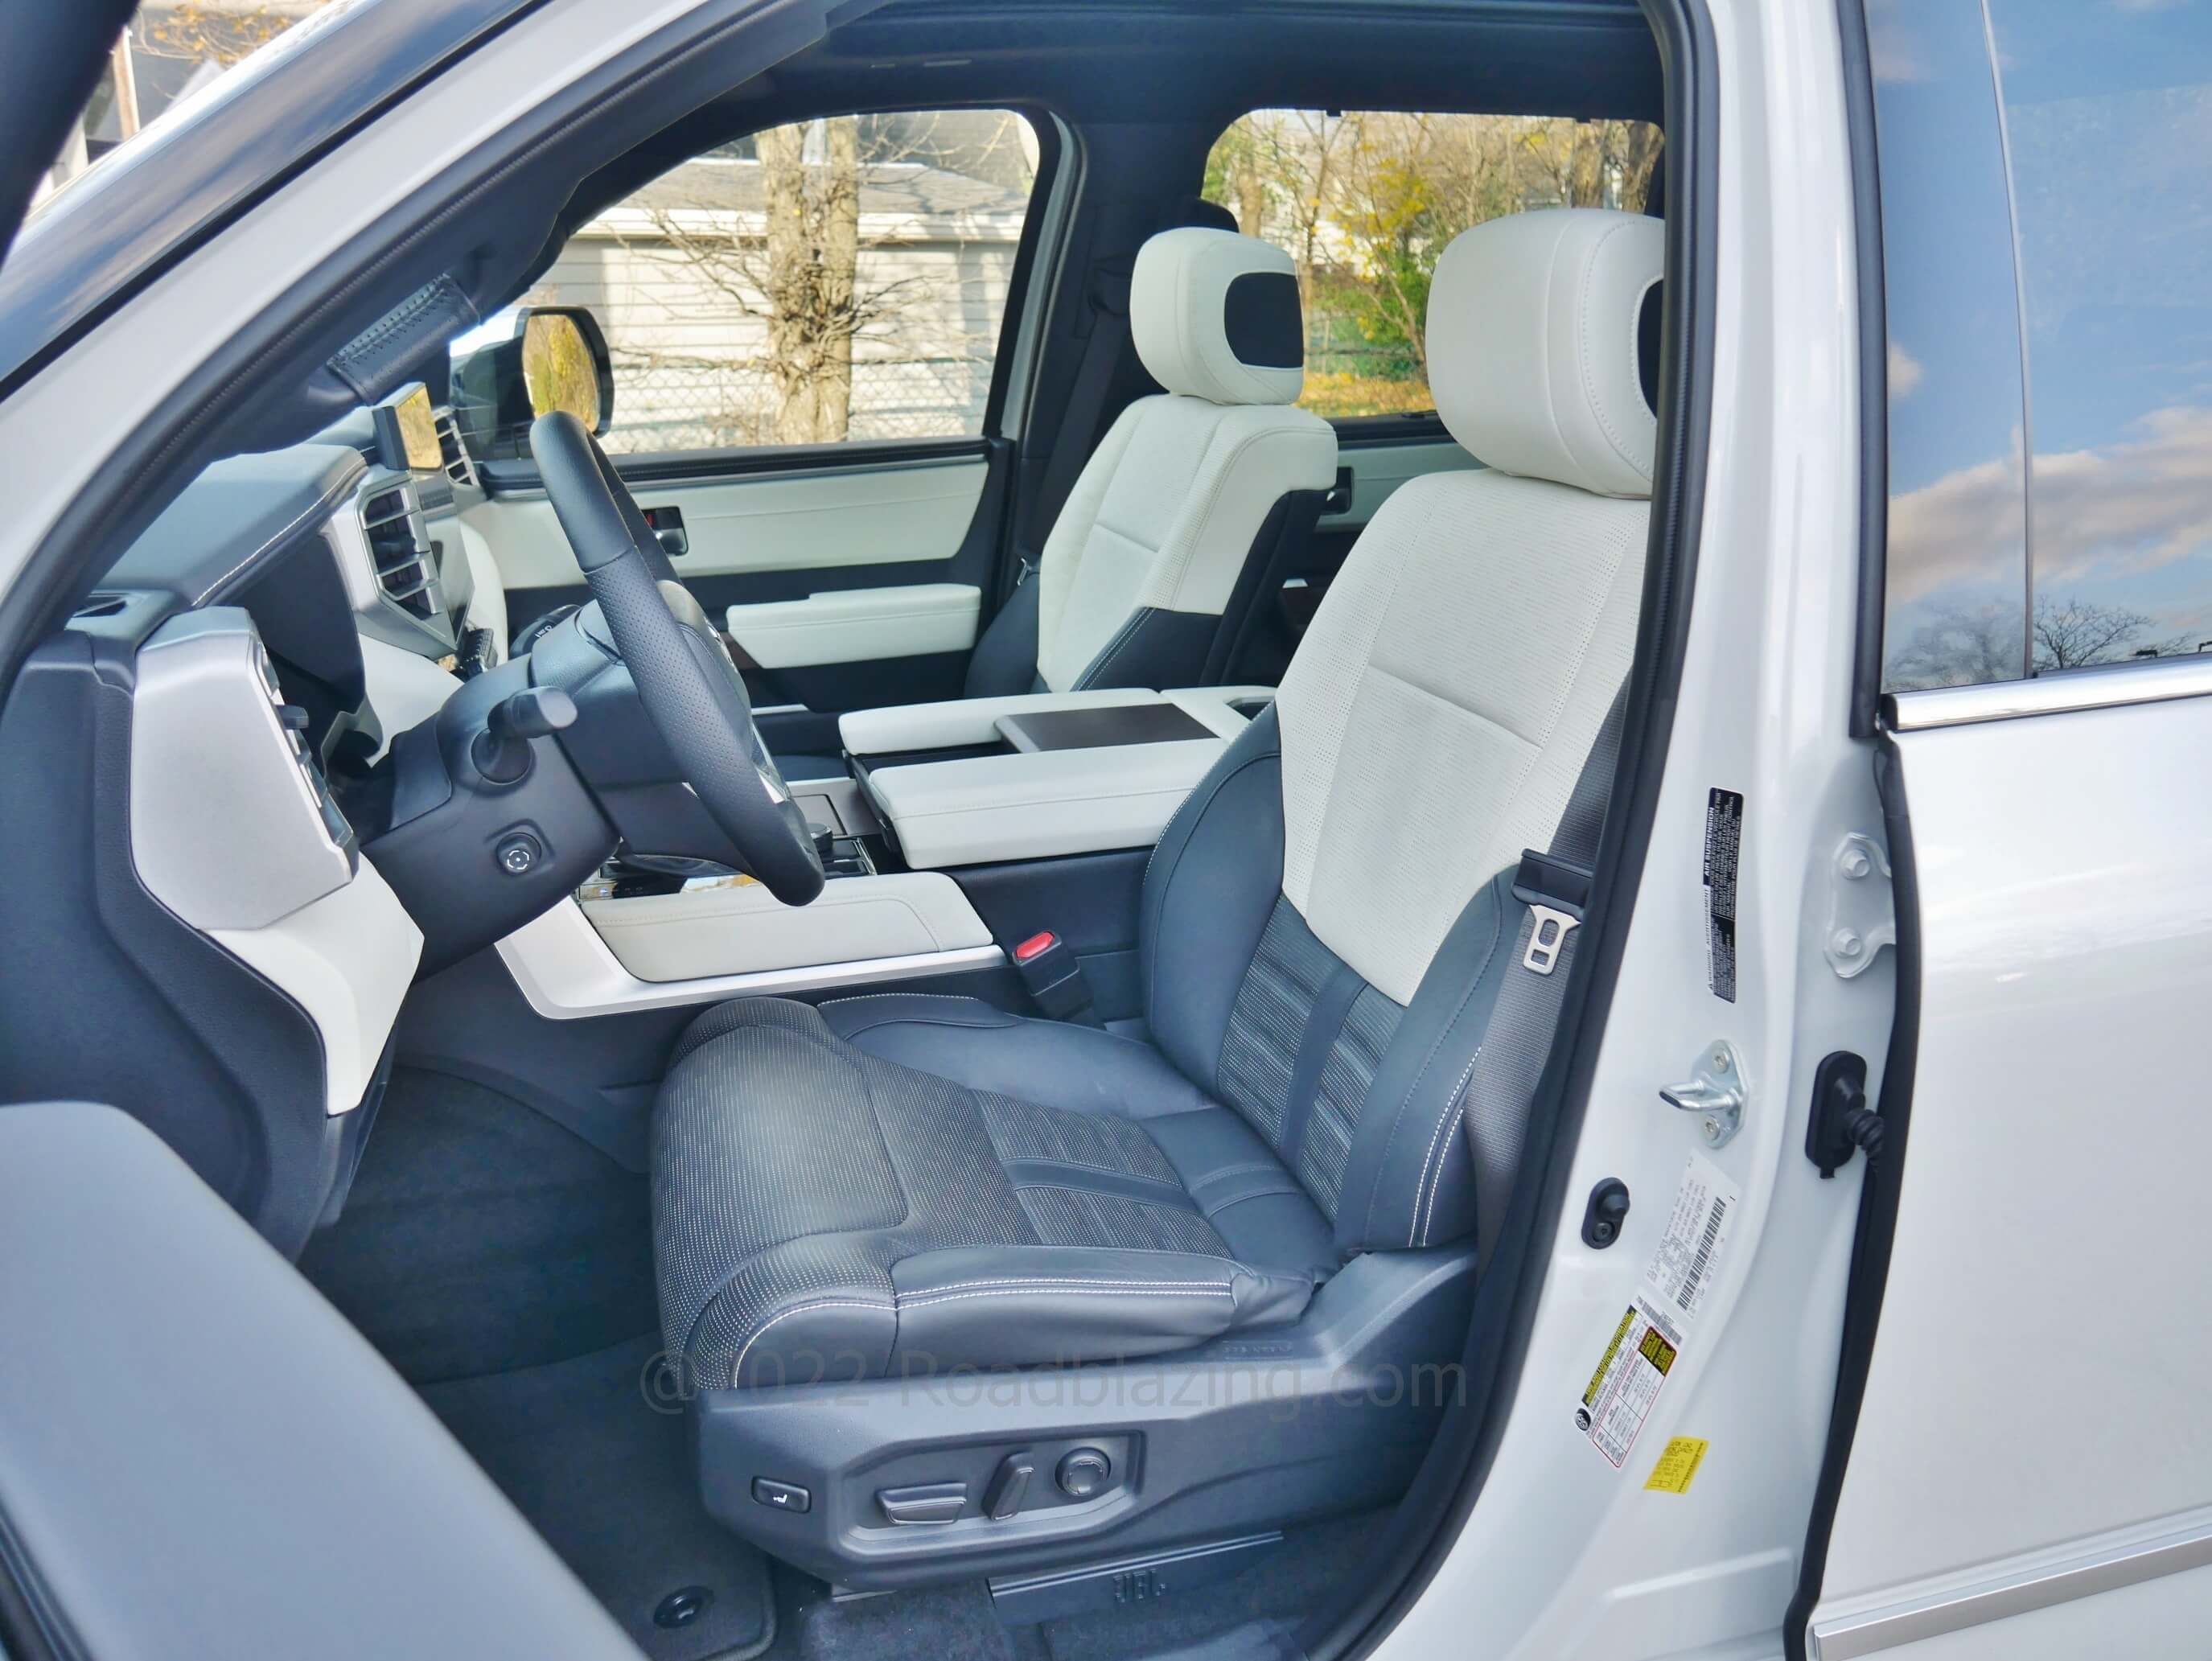 2022 Toyota Tundra CrewCab Capstone 4x4: nappa leather 8 way power front seats with power adjust steering wheel